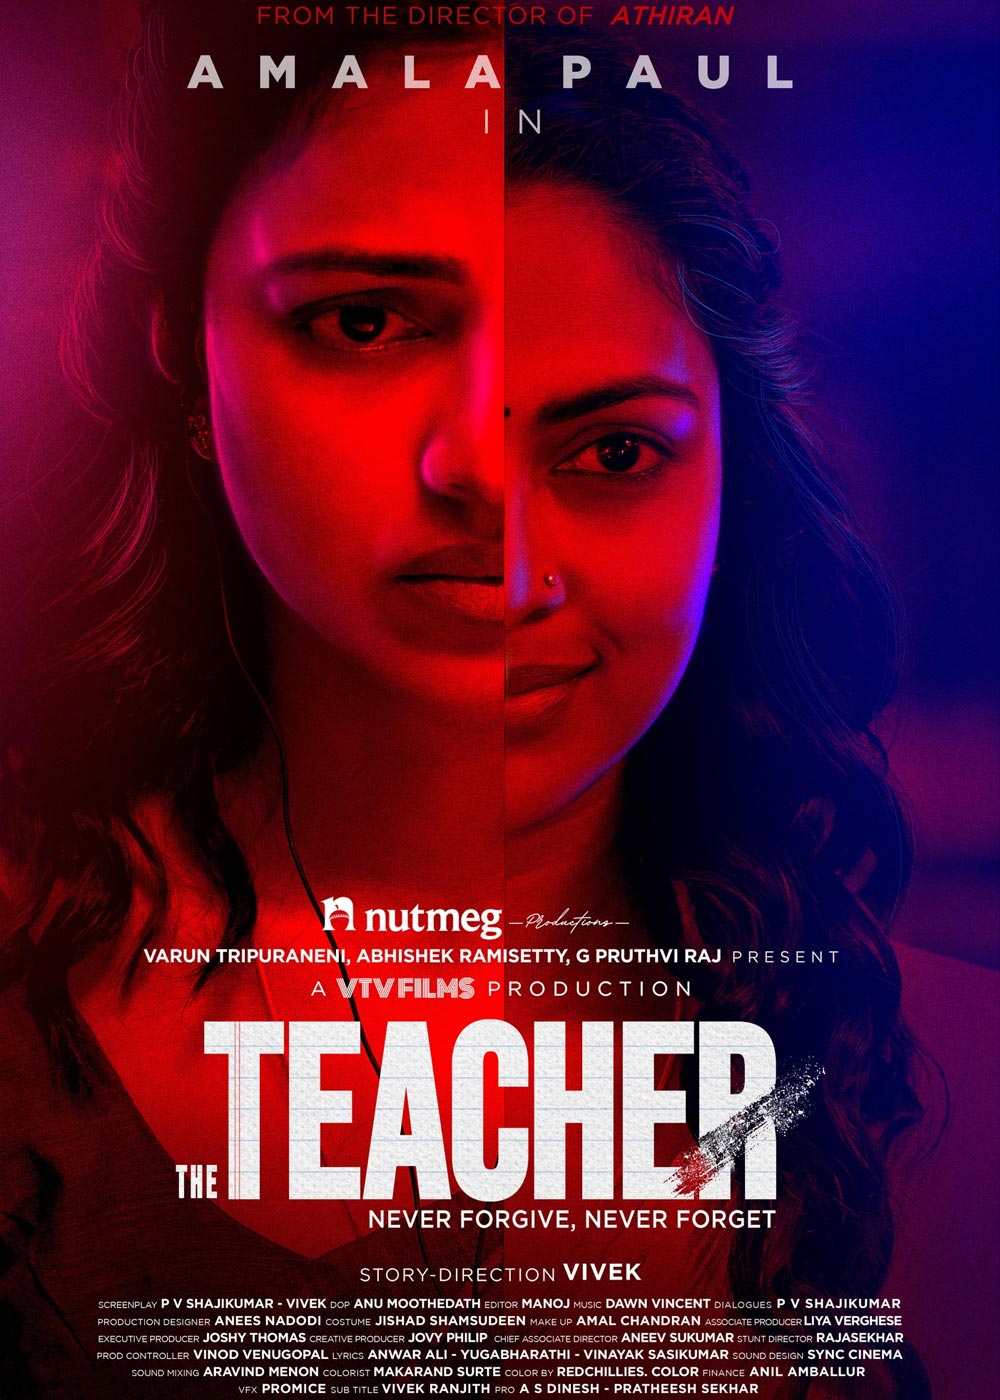 movie review the teacher